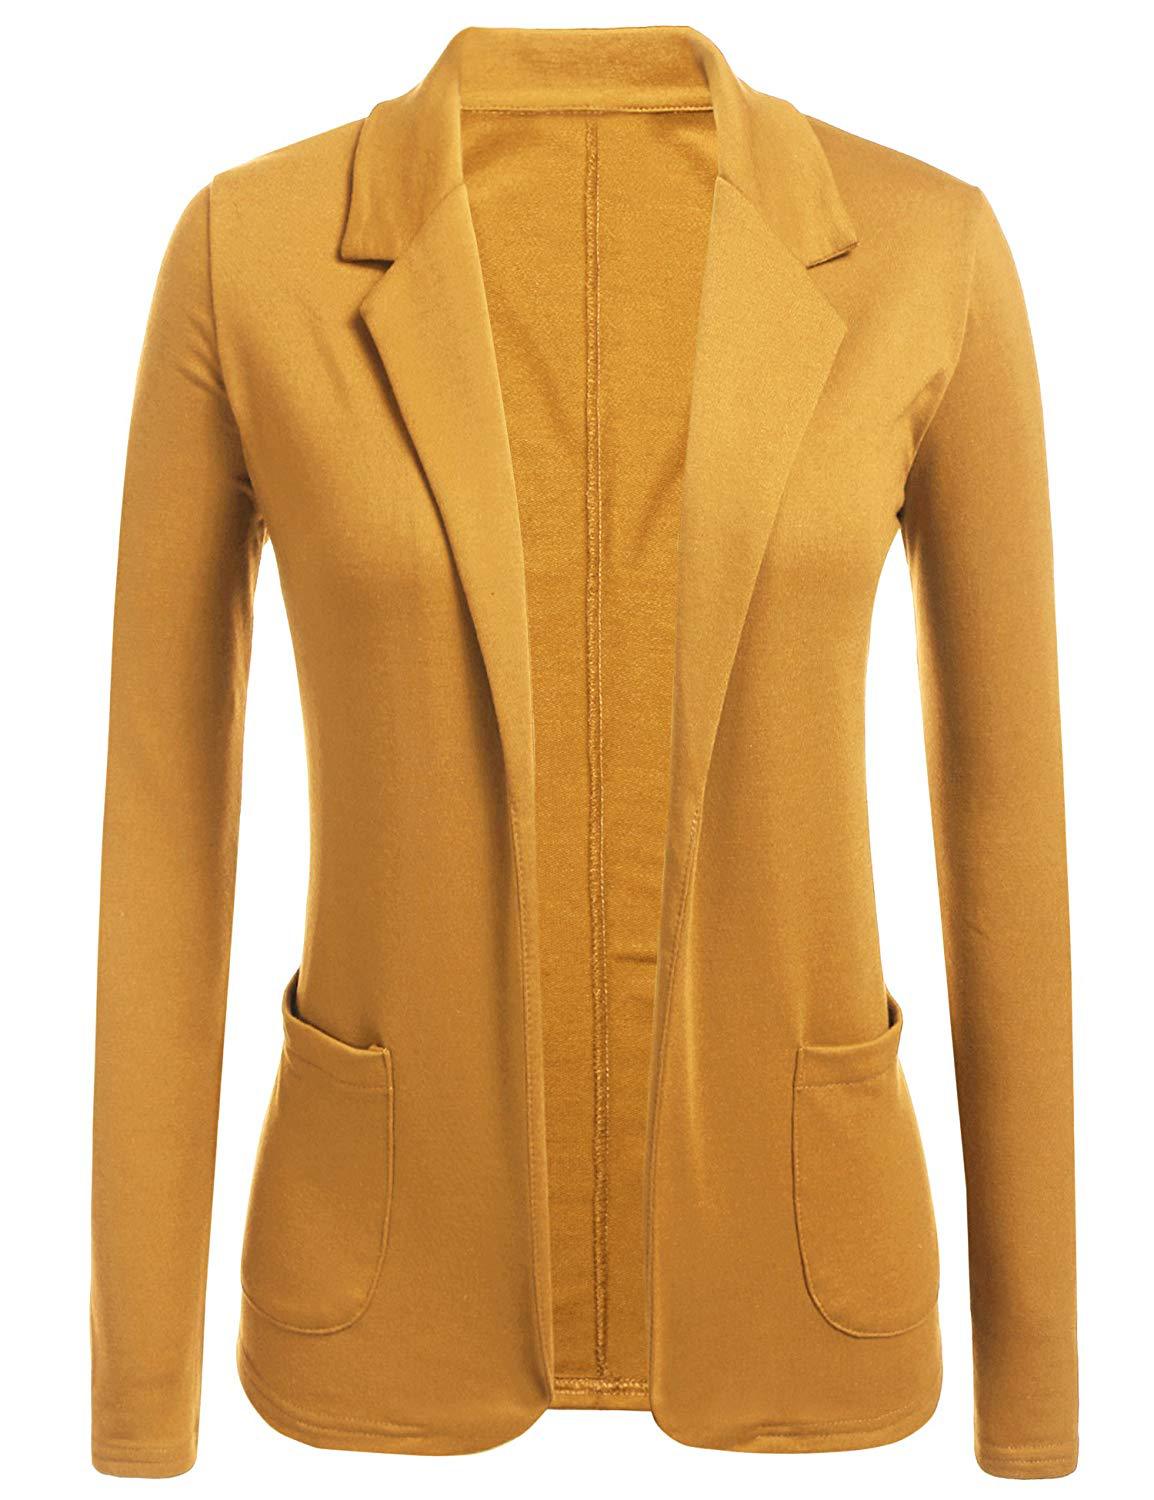 Women Blazer Coat Autumn Casual Long Sleeve Work Office Business Lady Slim Suit Jacket yellow